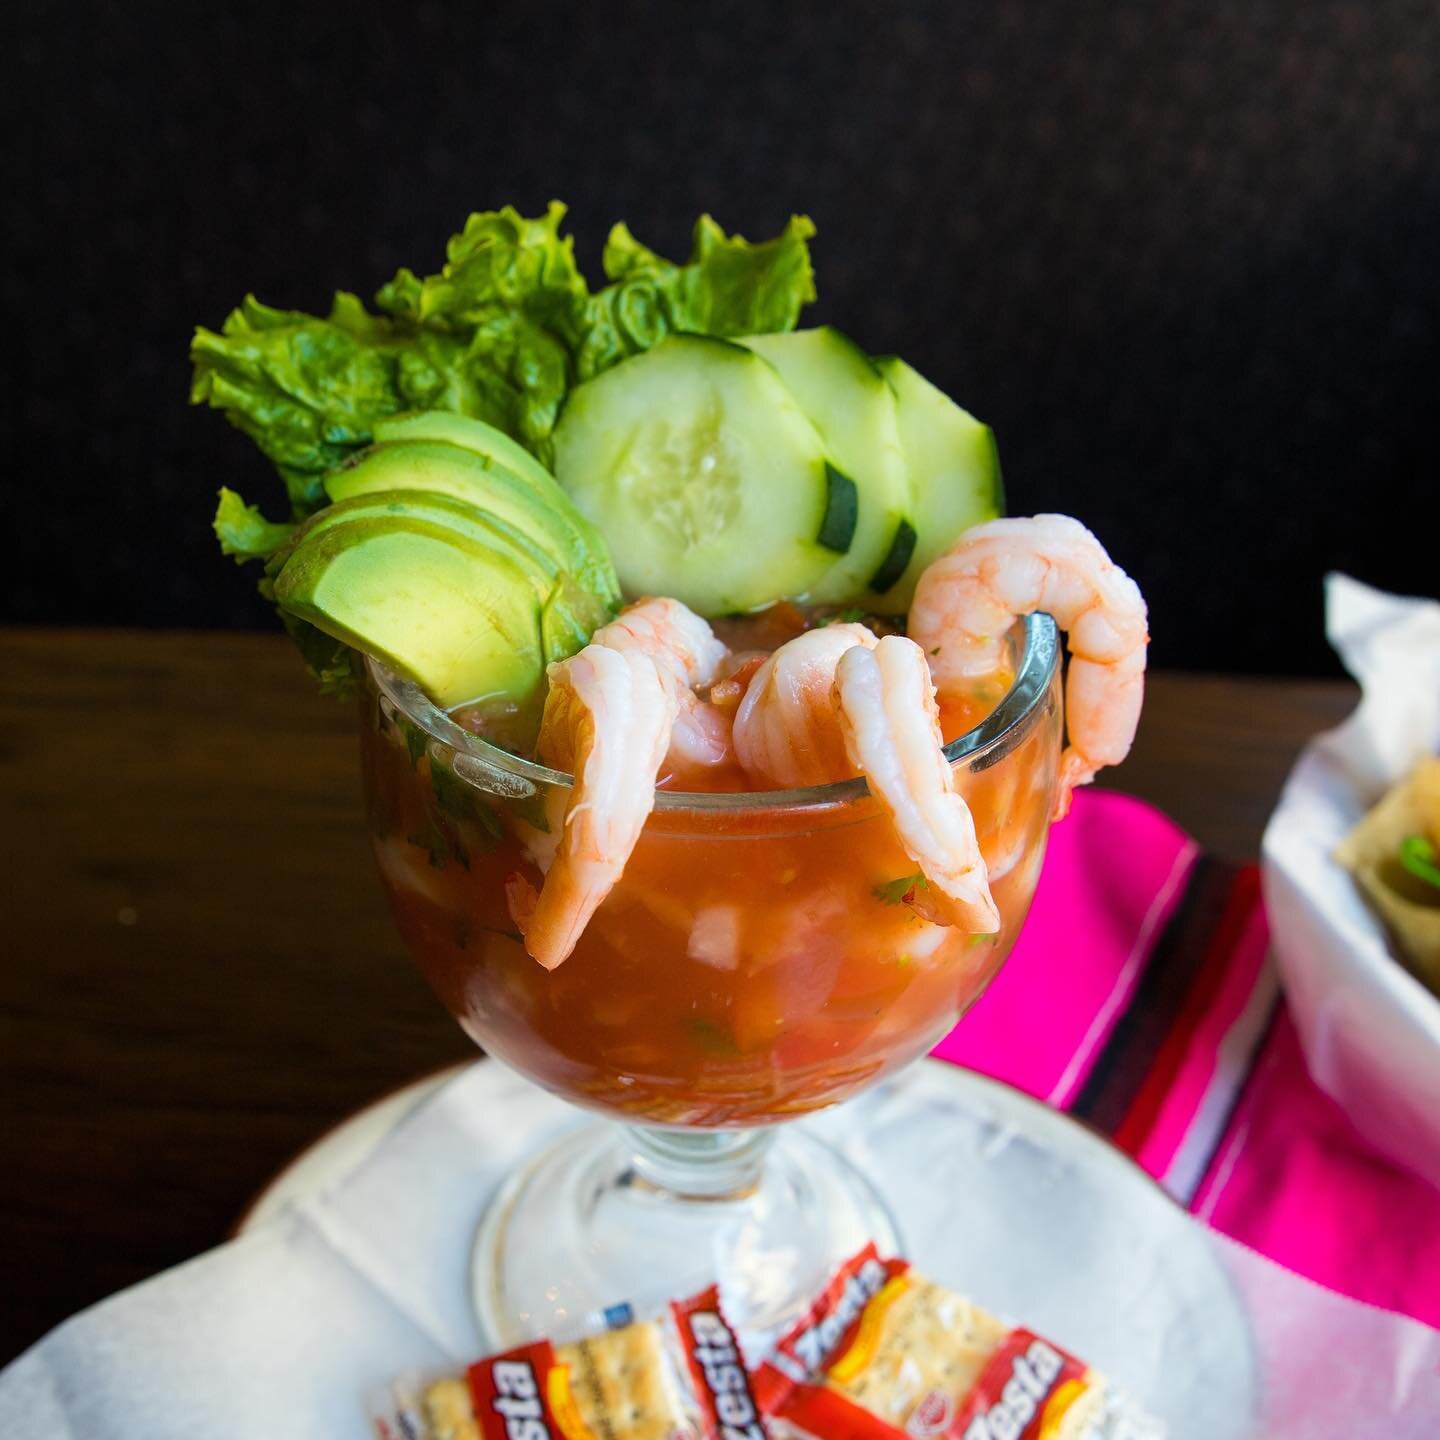 ☀️ Summer Days Call For Some Refreshing Shrimp Cocktails!